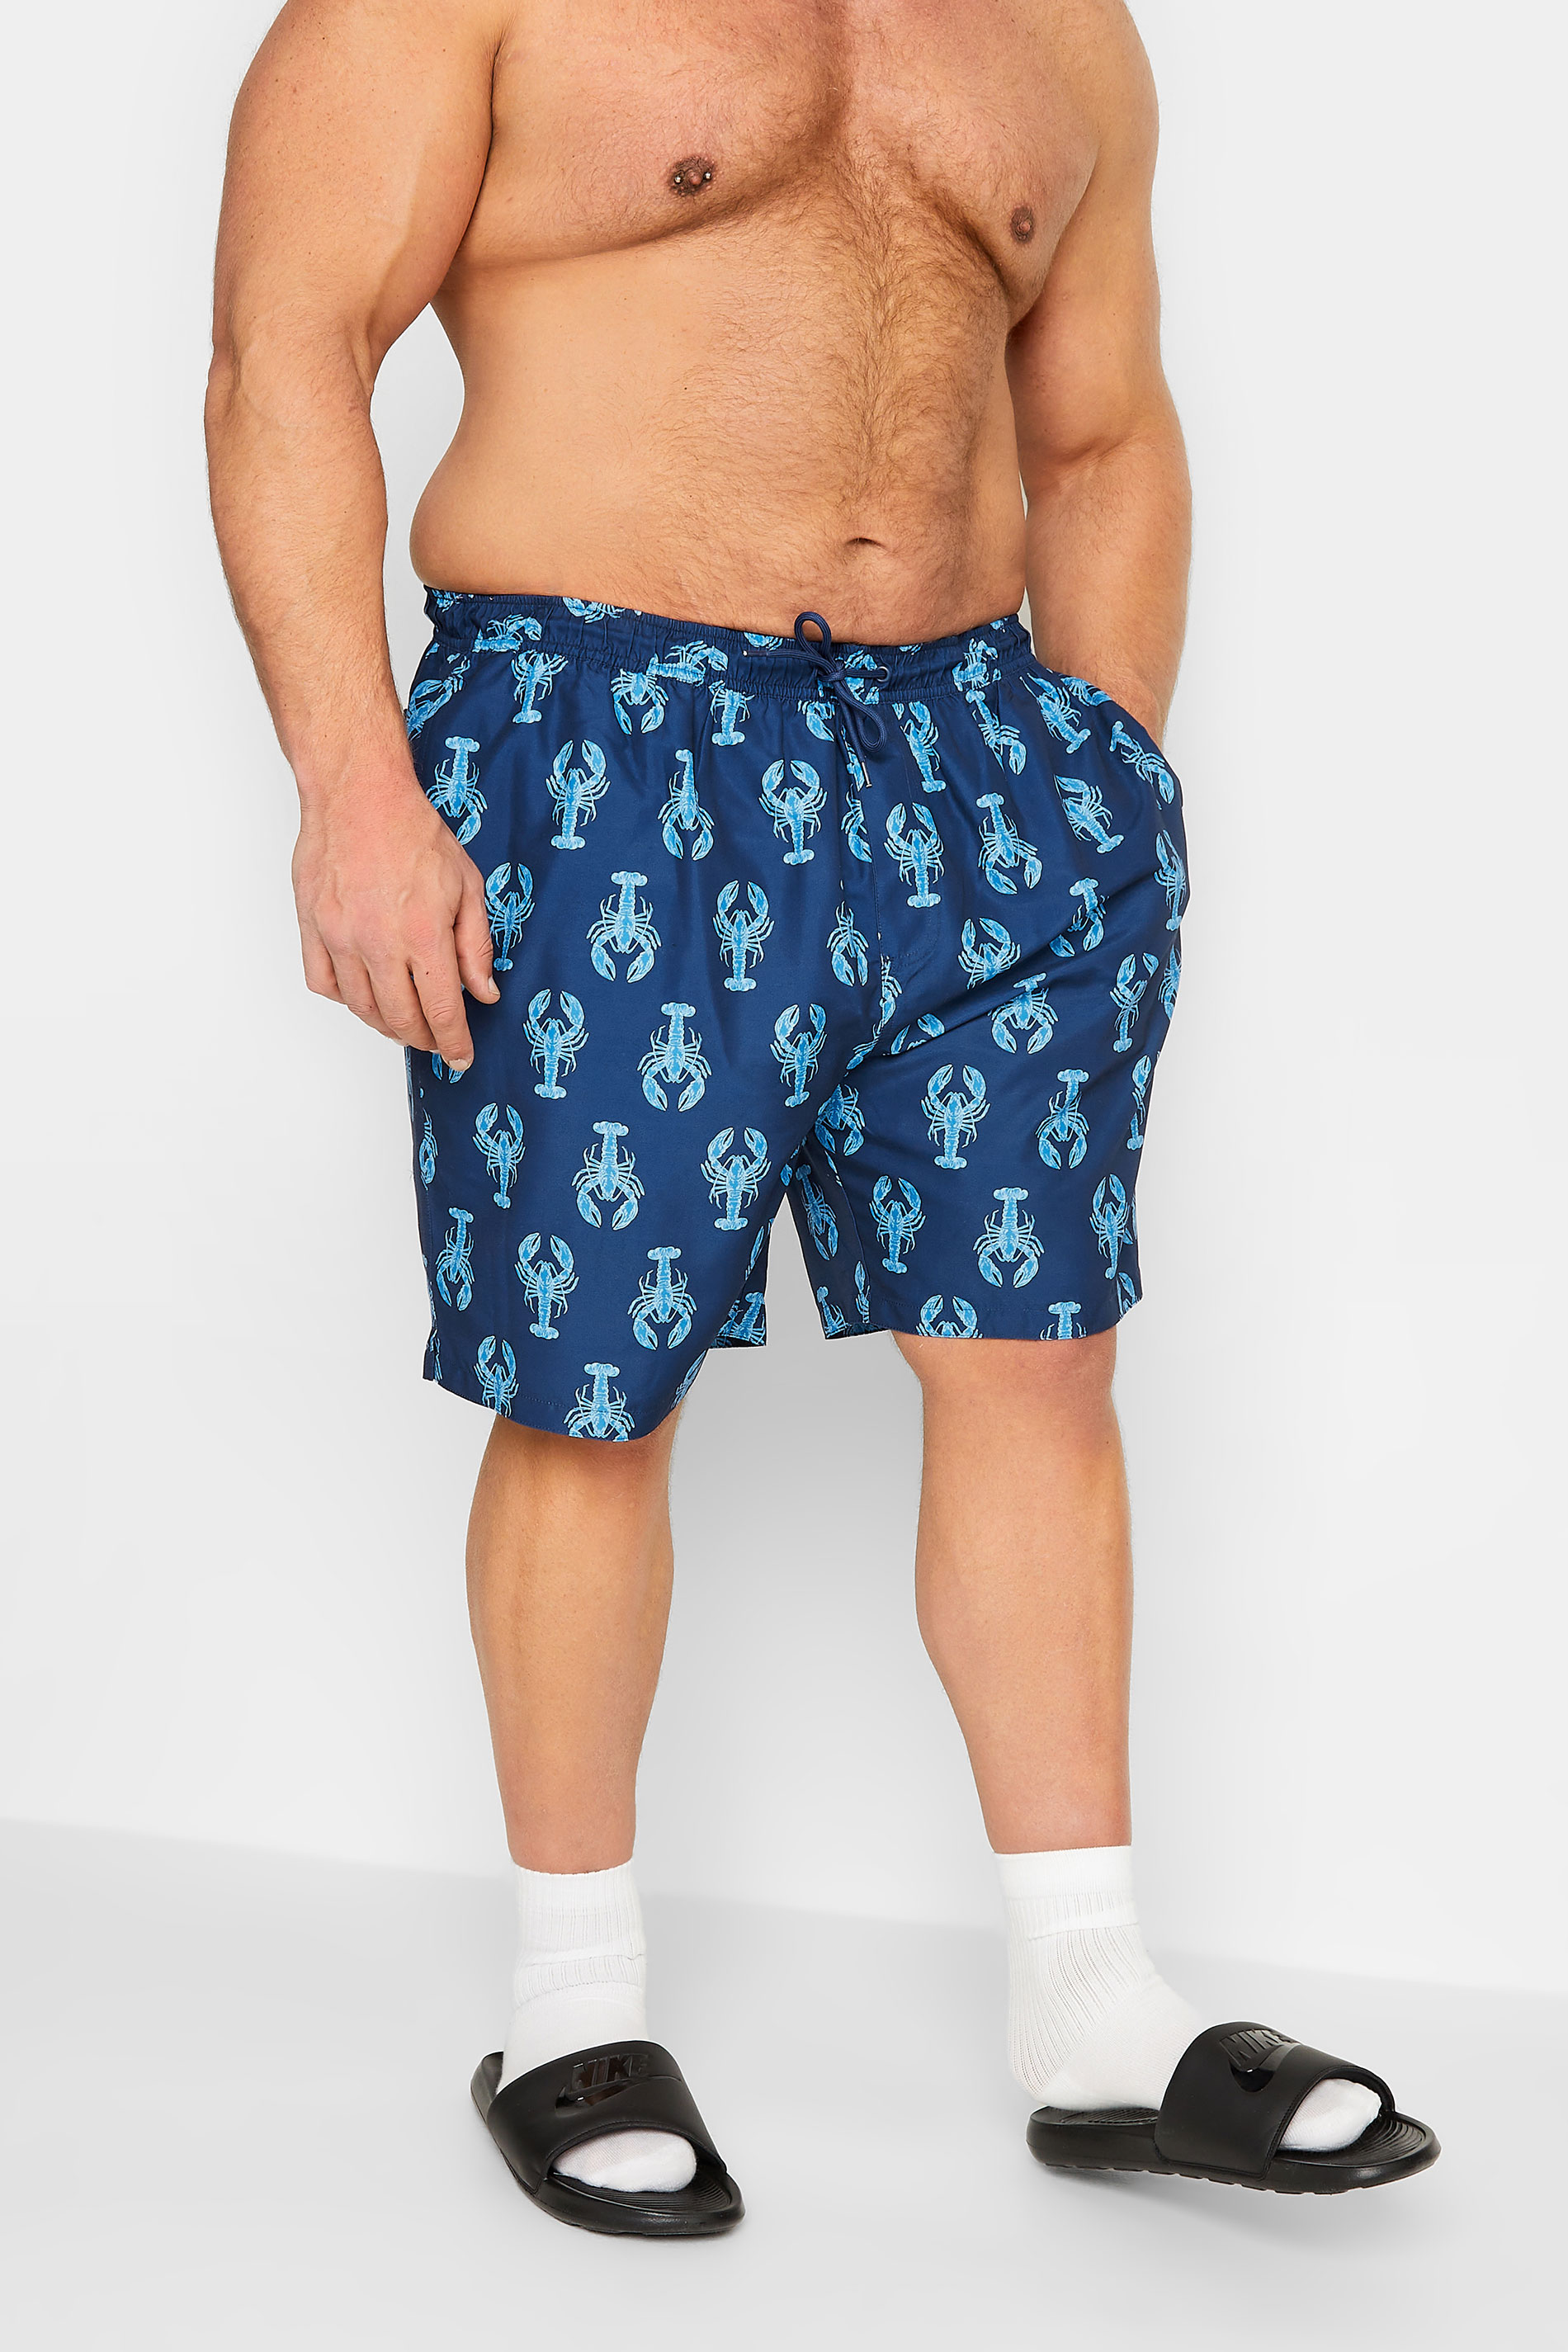 BadRhino Big & Tall Navy Blue Lobster Print Swim Shorts | BadRhino 1